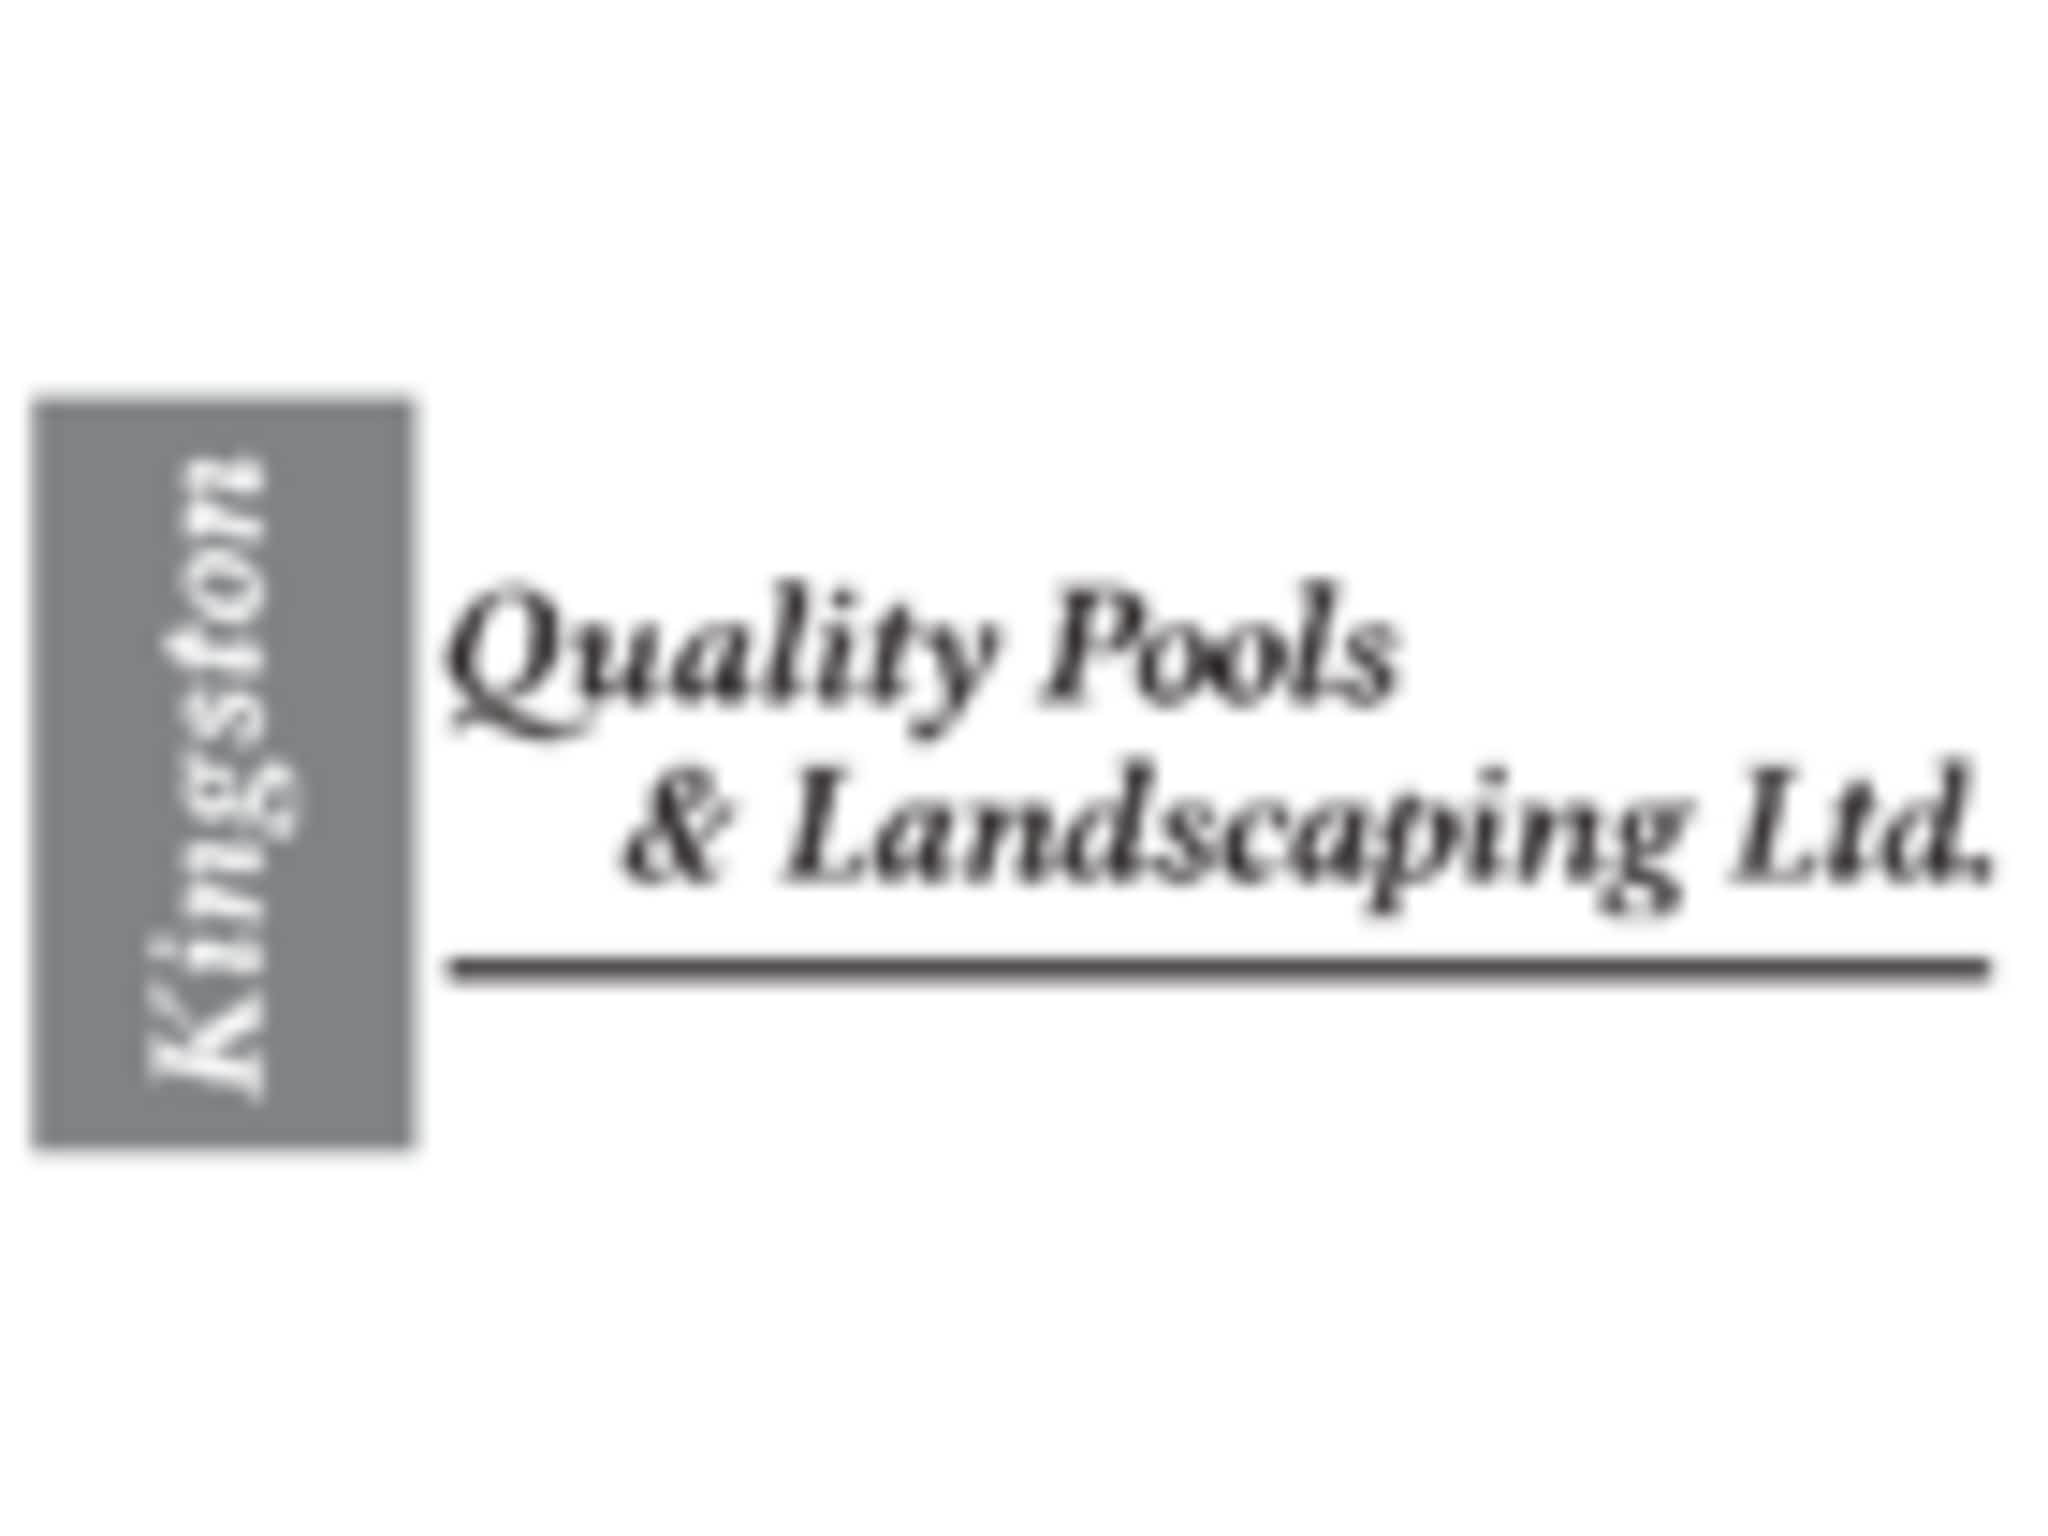 photo Kingston Quality Pools & Landscaping Ltd.